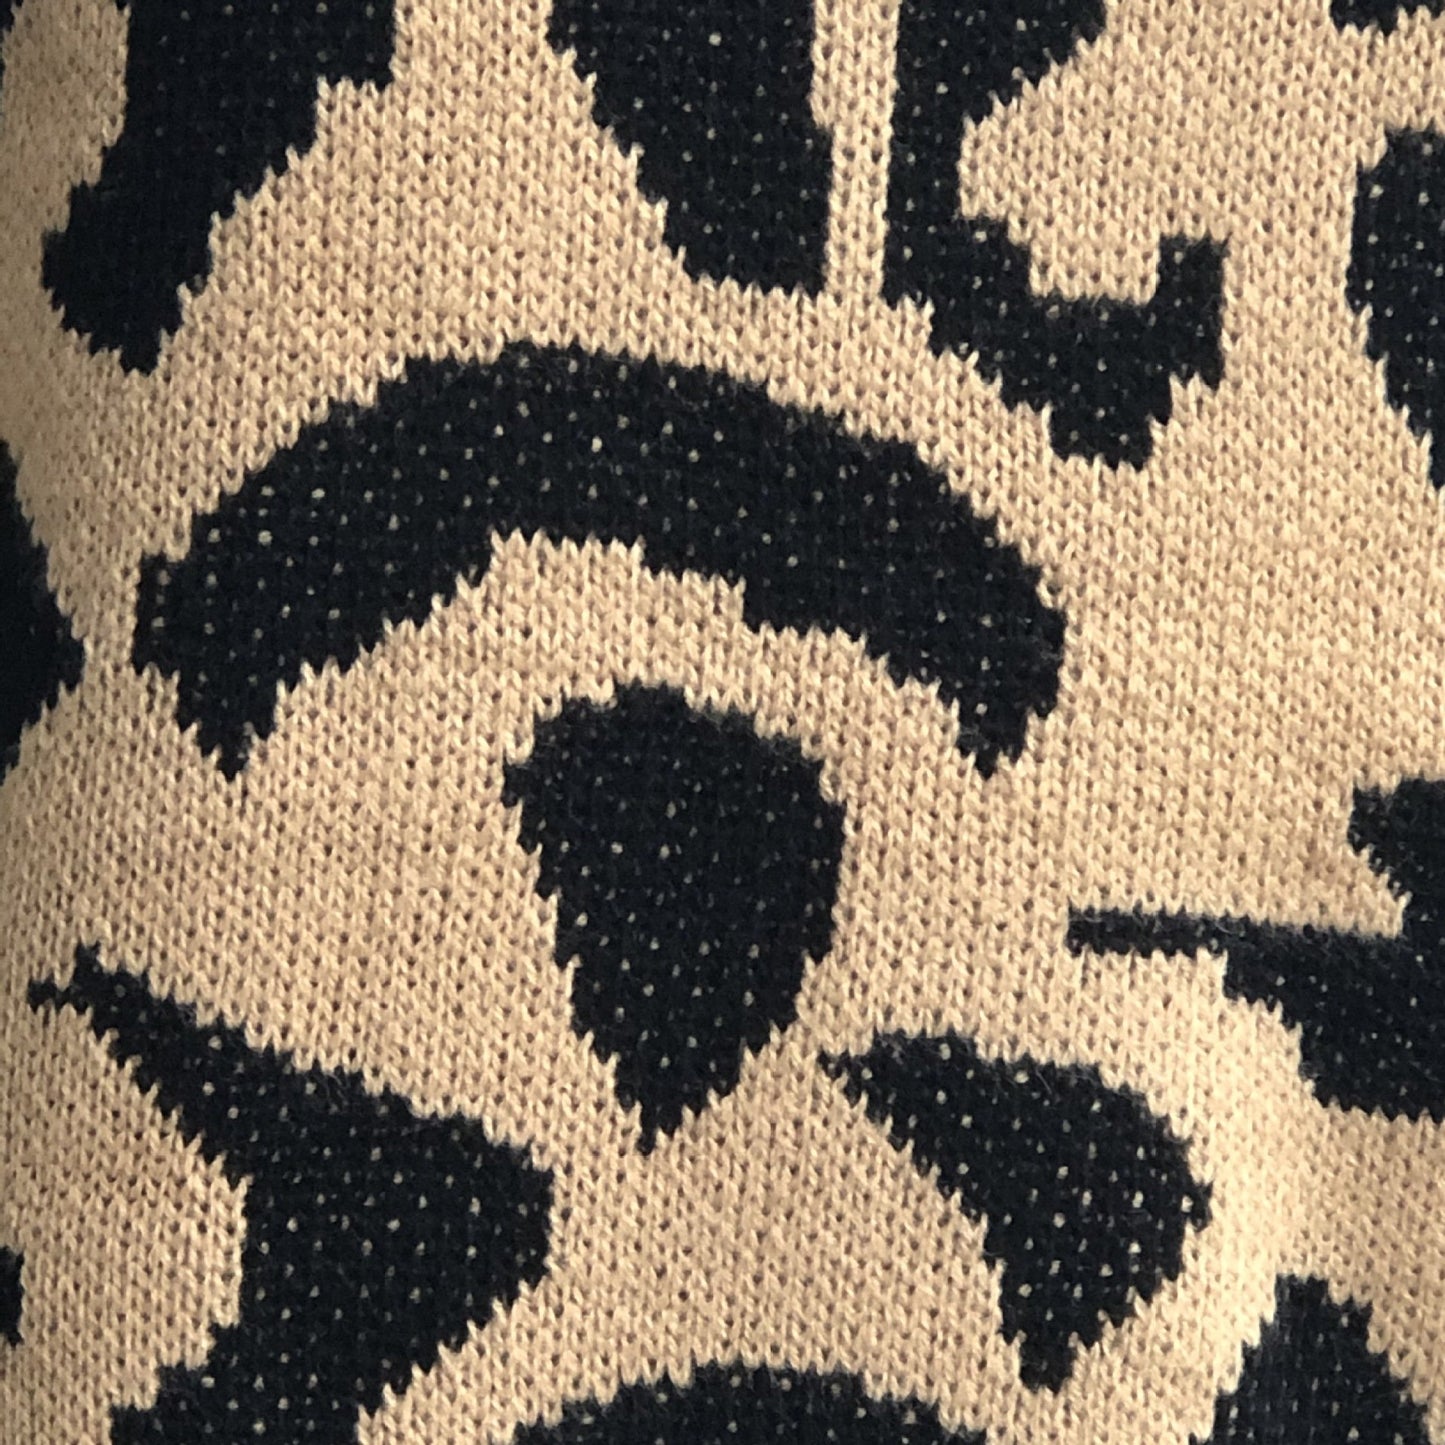 Leopard Turtleneck Knitting Sweater Dresses for Women